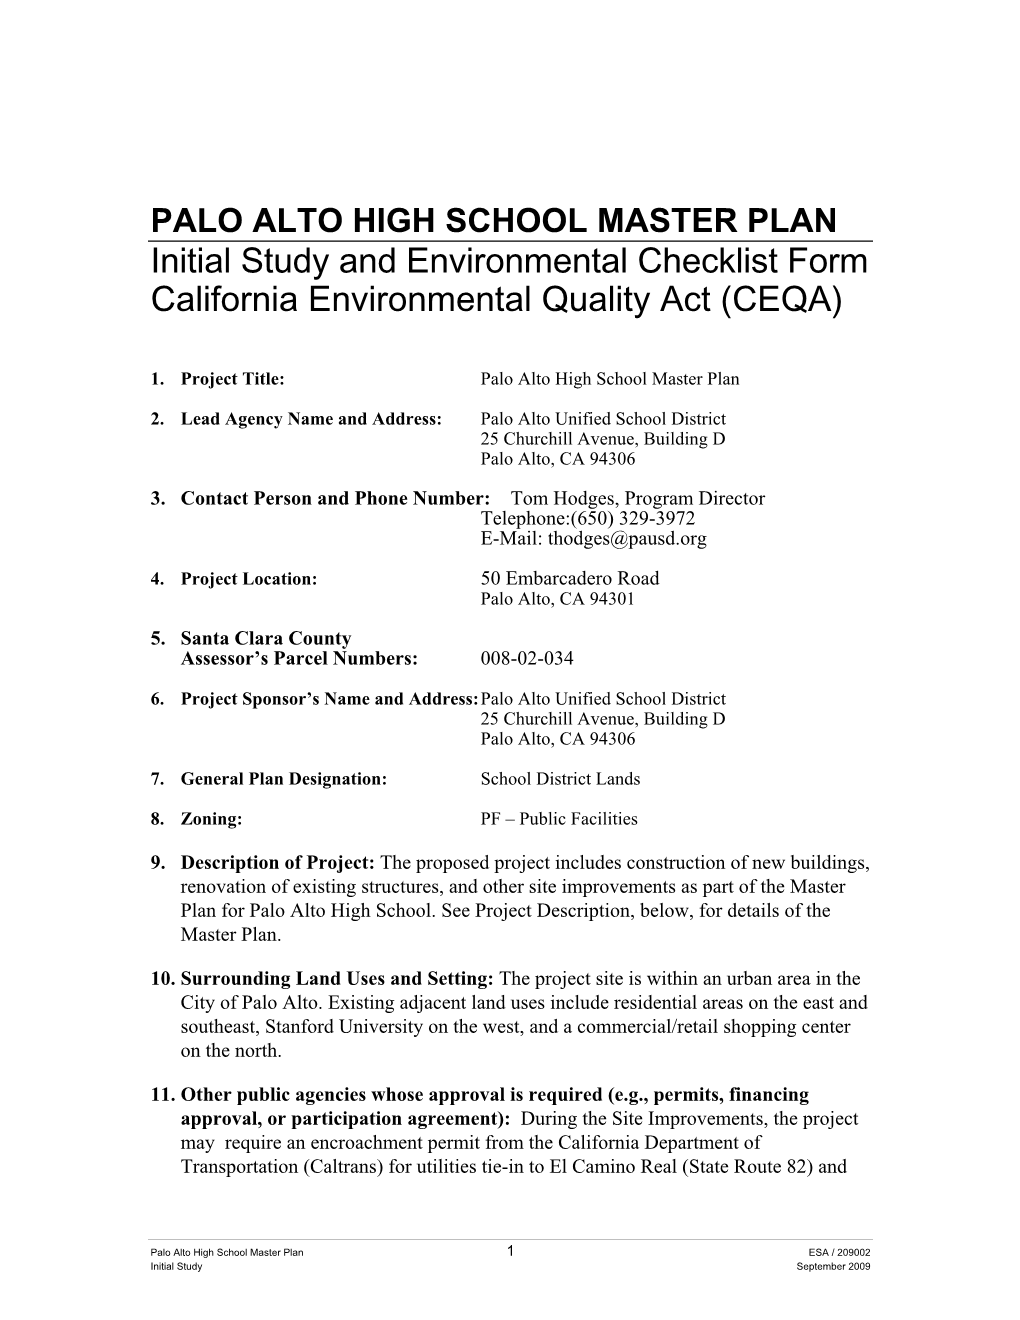 Initial Study and Environmental Checklist Form California Environmental Quality Act (CEQA)